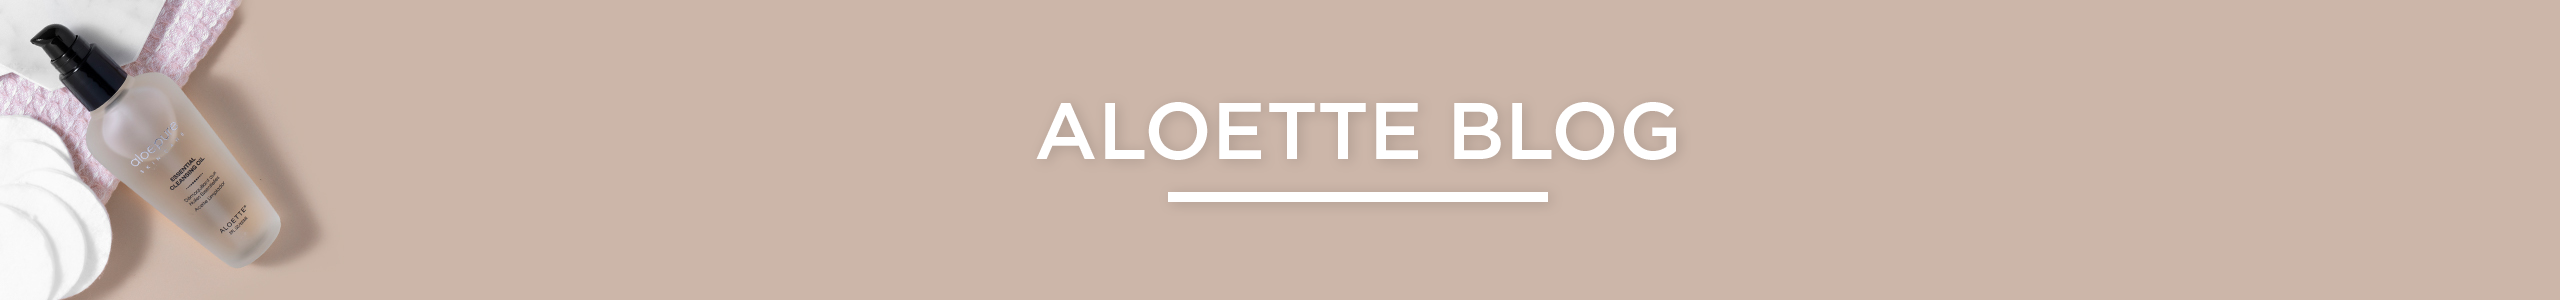 Aloette blog